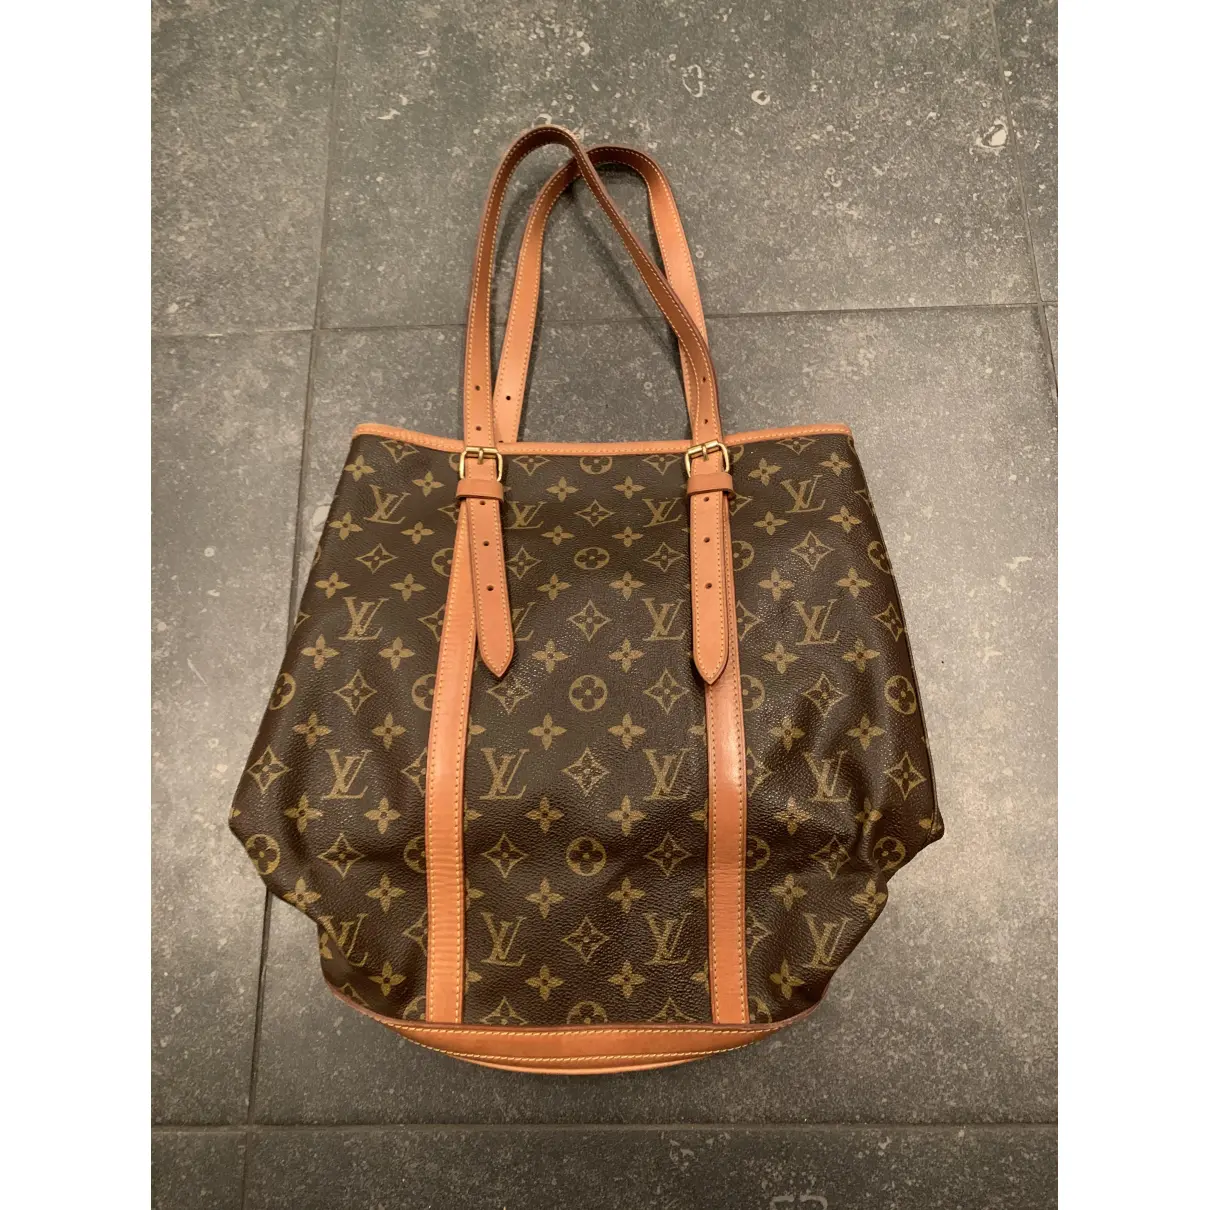 Buy Louis Vuitton Bucket  leather bag online